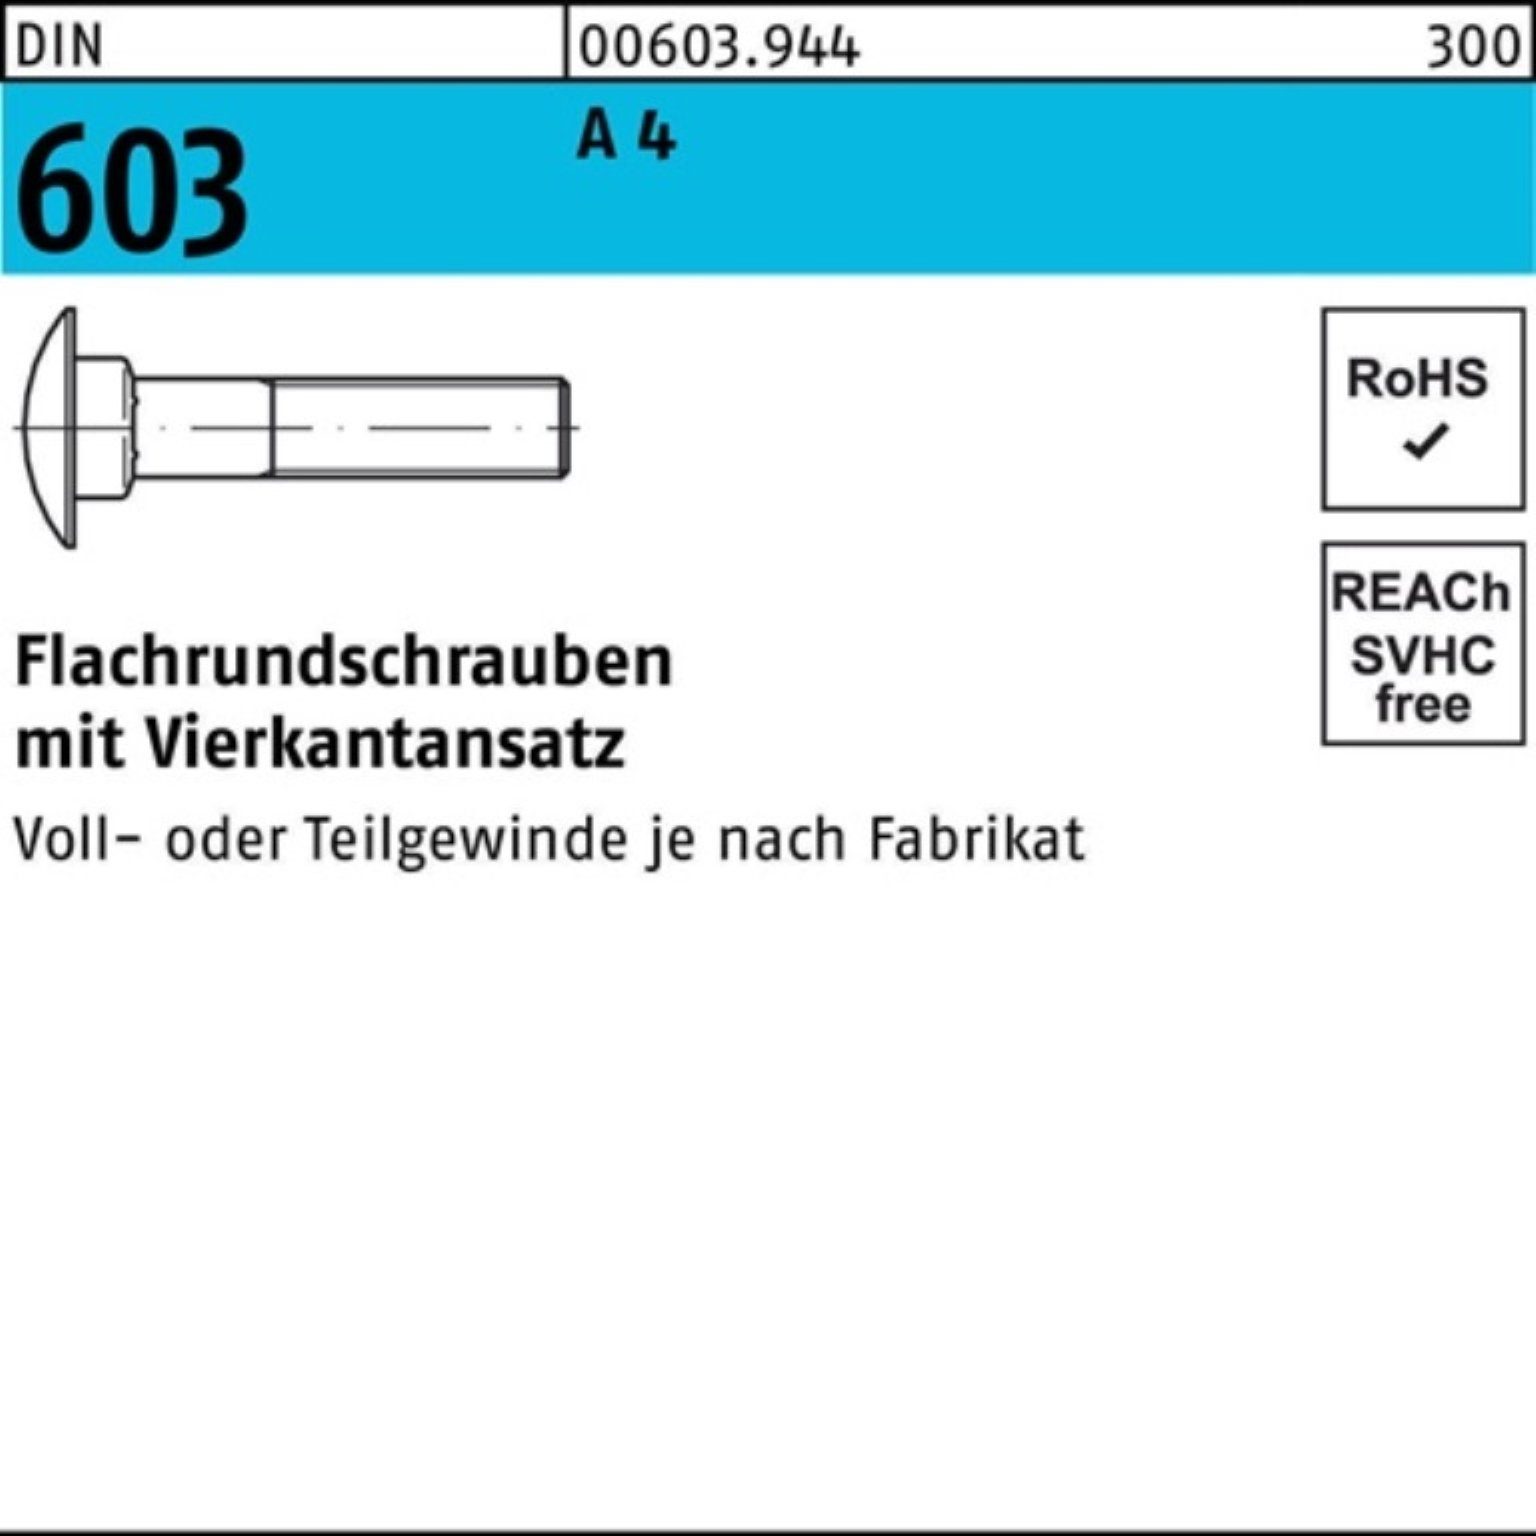 Reyher Schraube 100er Pack Flachrundschraube DIN 603 Vierkantansatz M8x 110 A 4 10 St